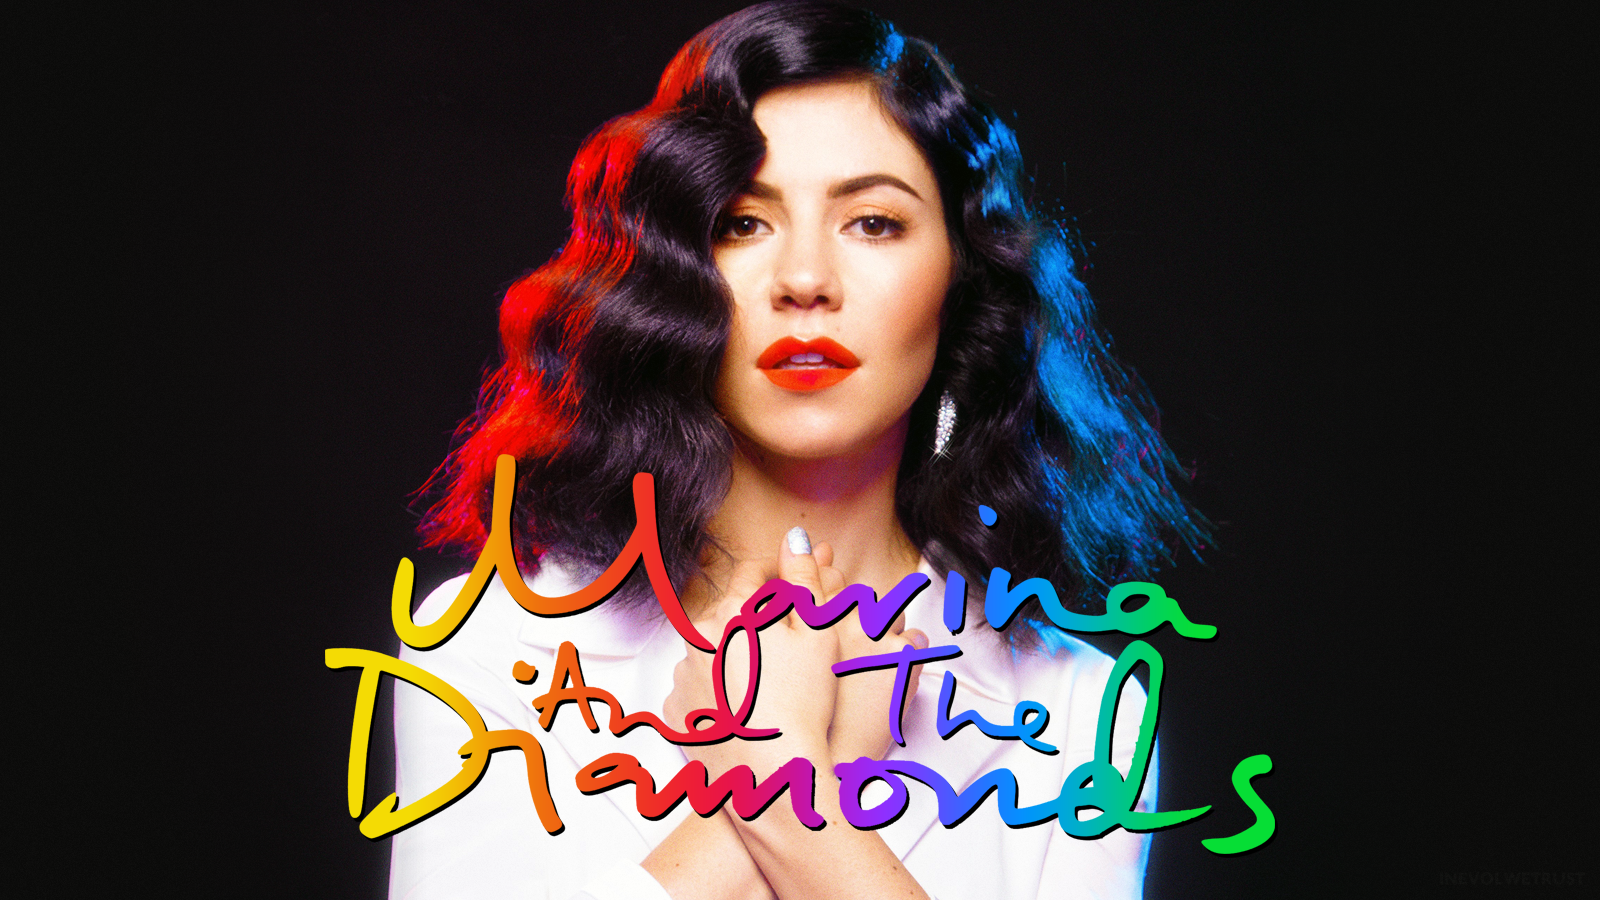 Marina and the Diamonds Wallpaper. Diamonds Wallpaper, Ombre Diamonds Wallpaper and Diamonds Background